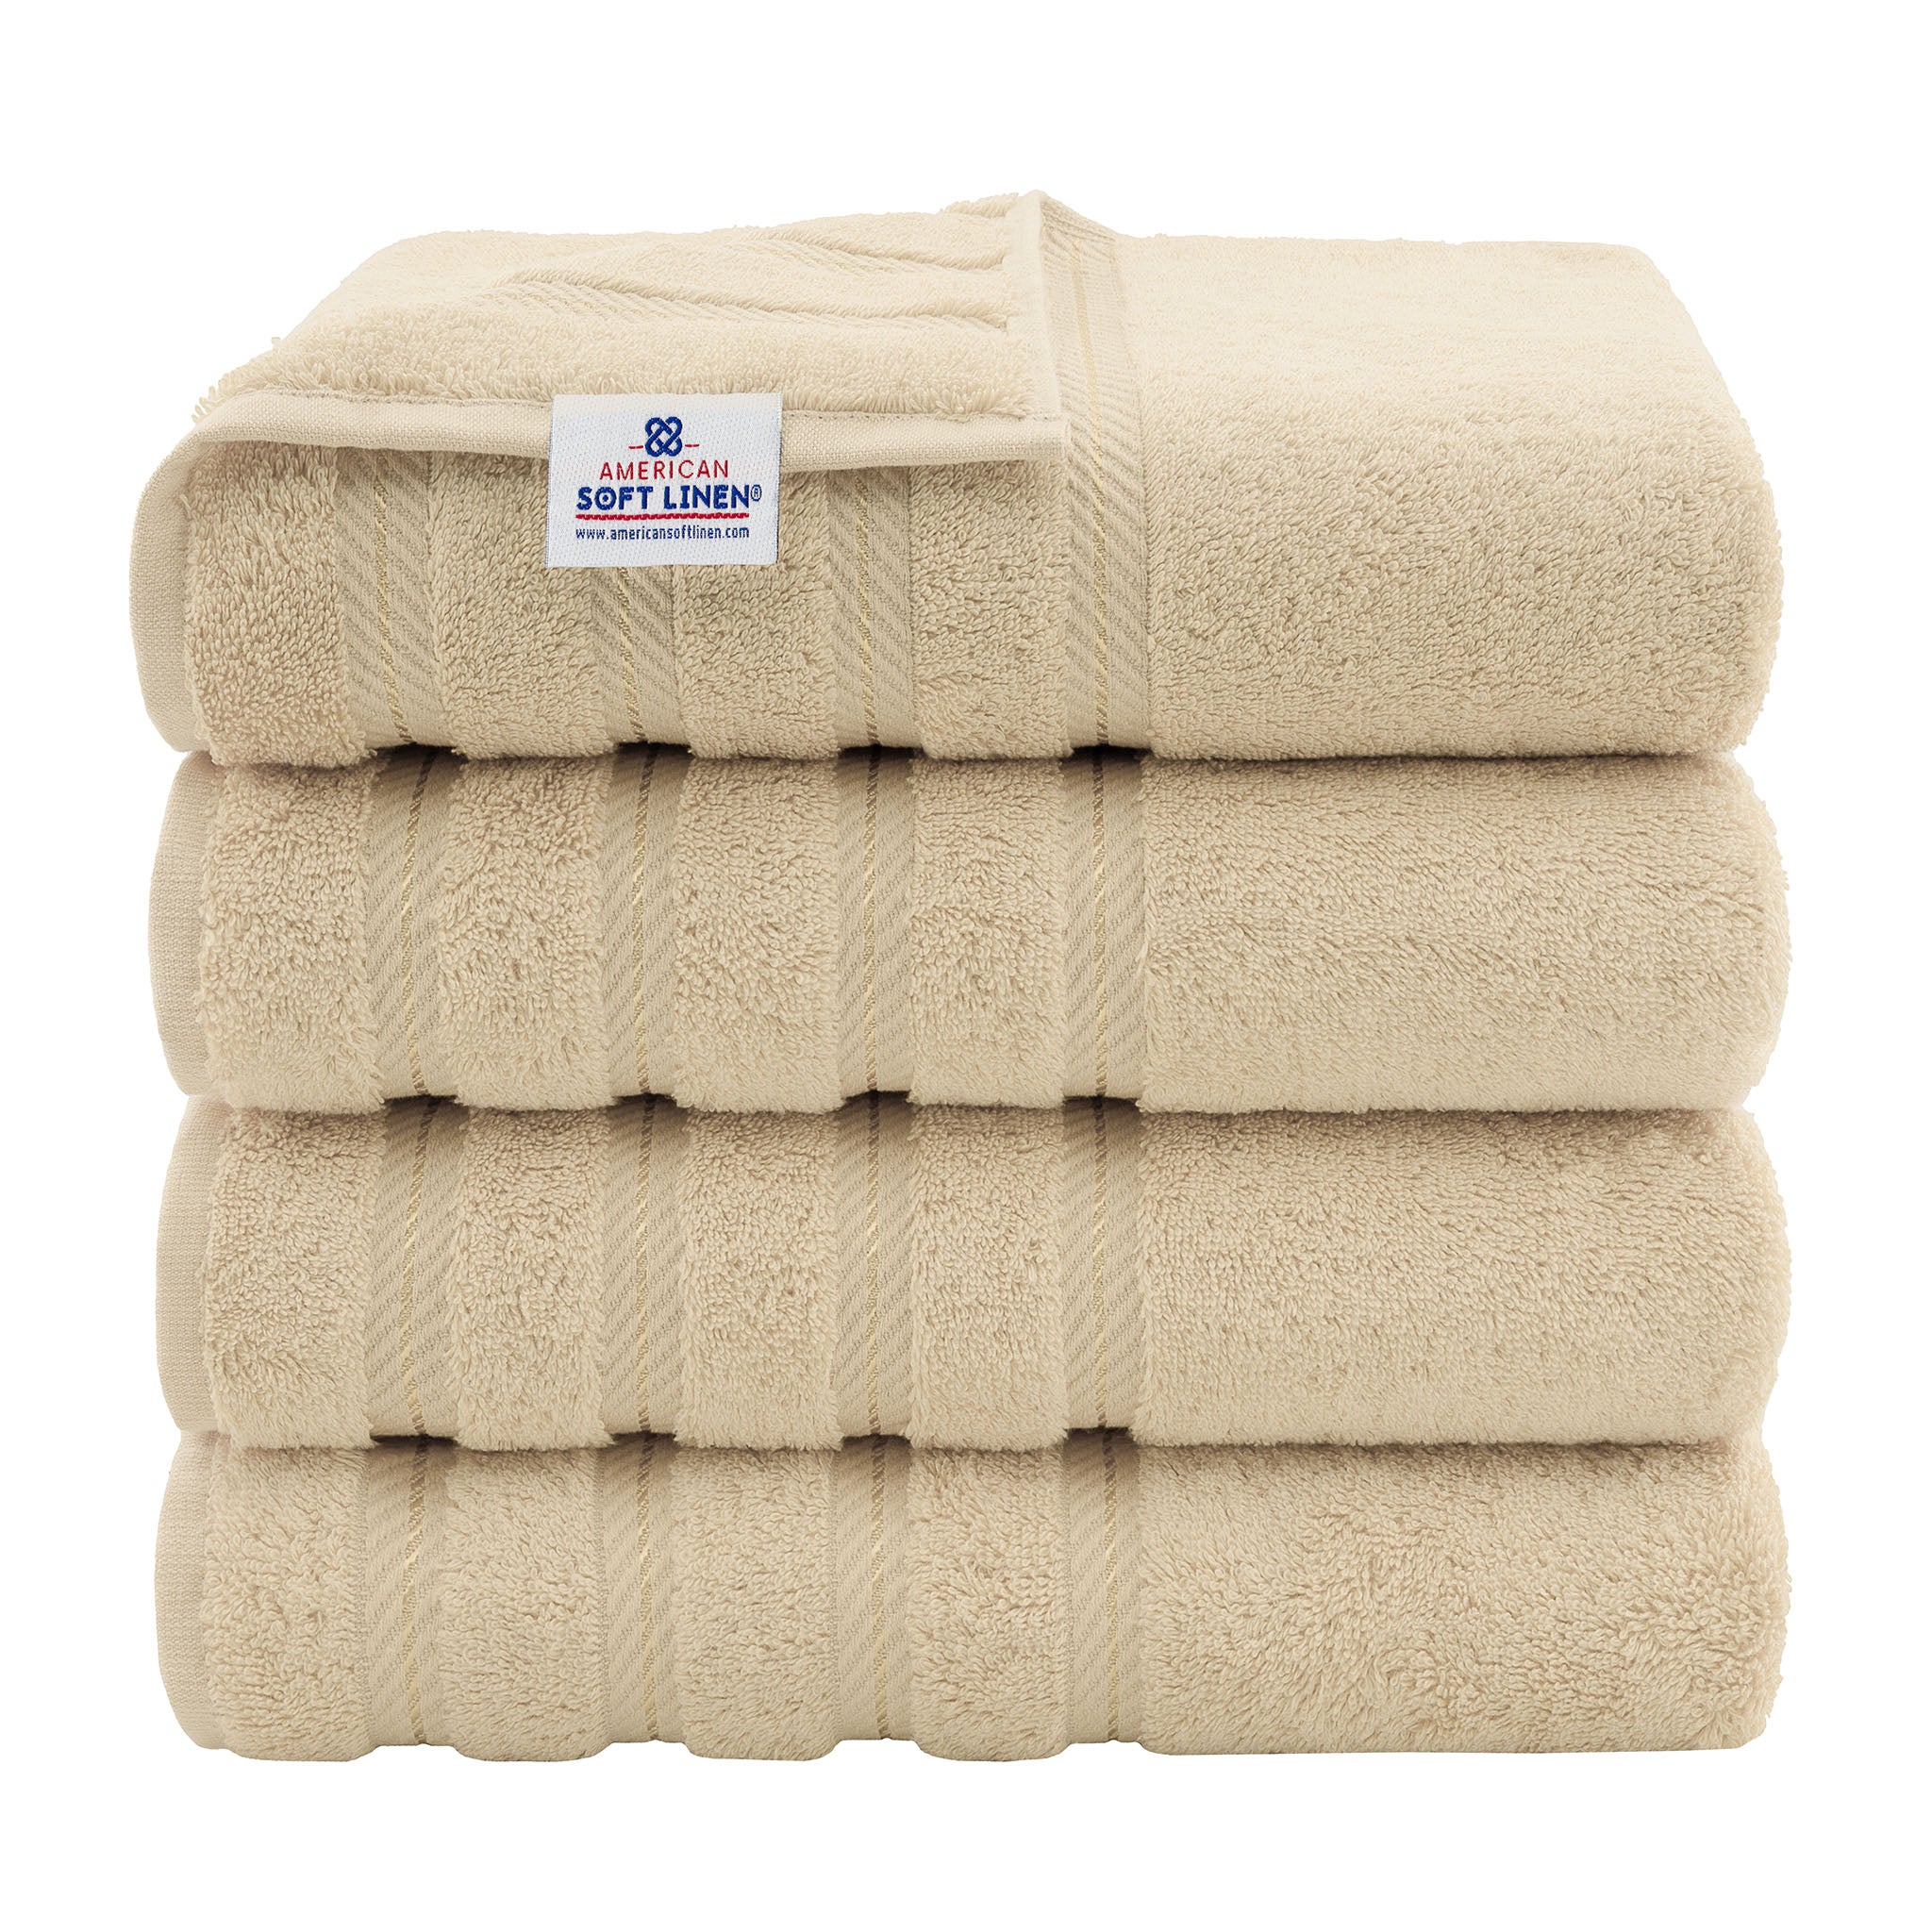 American Soft Linen Bath Towels 100% Turkish Cotton 4 Piece Luxury Bath  Towel Sets for Bathroom - Sand Taupe 